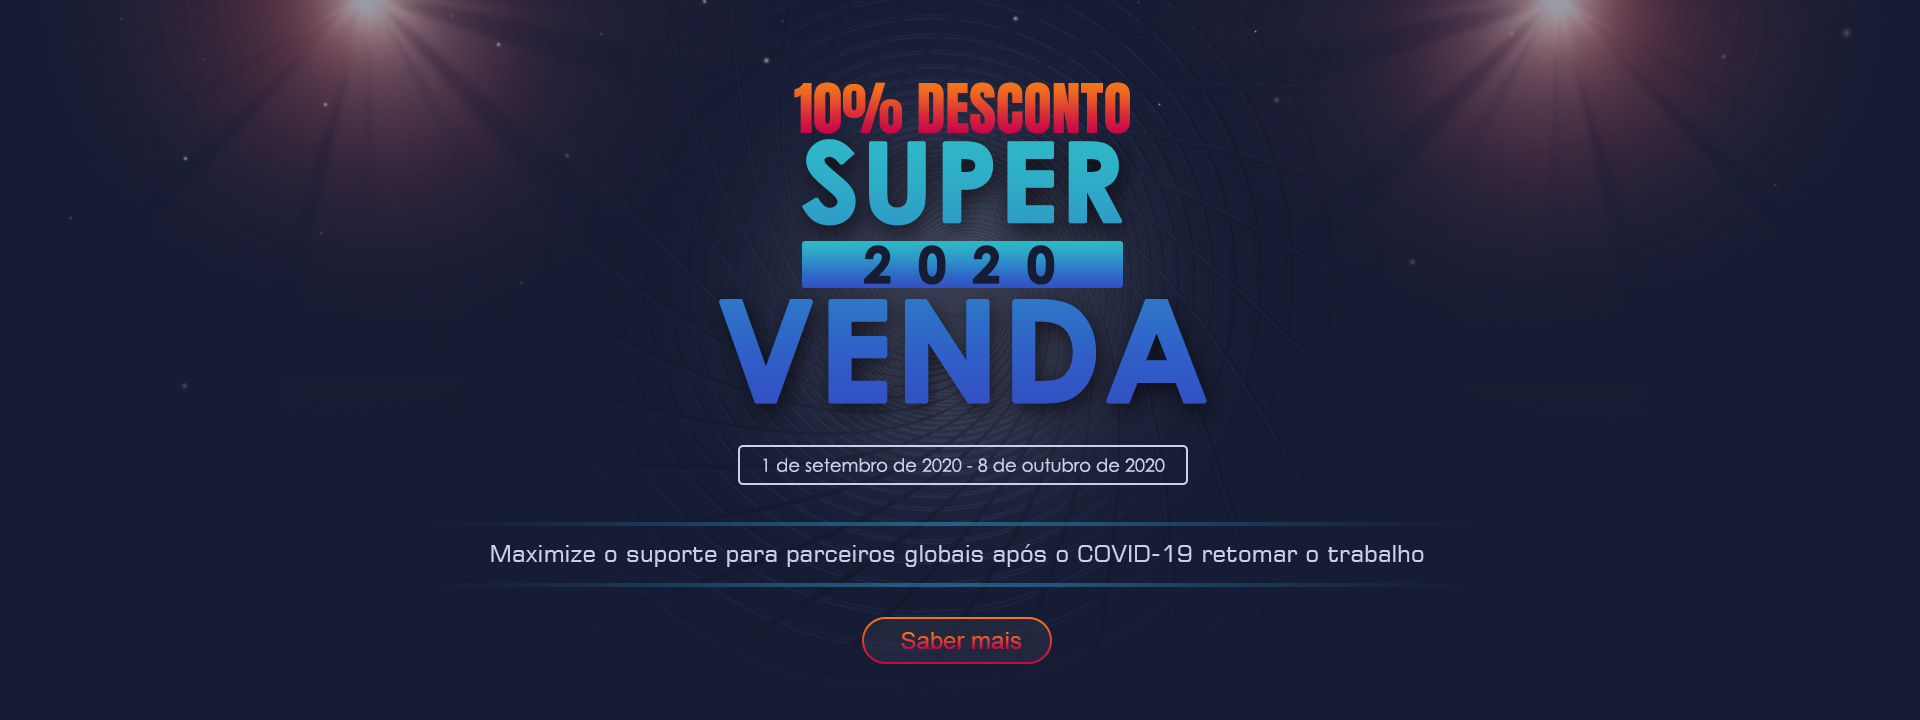 Super Venda 2020